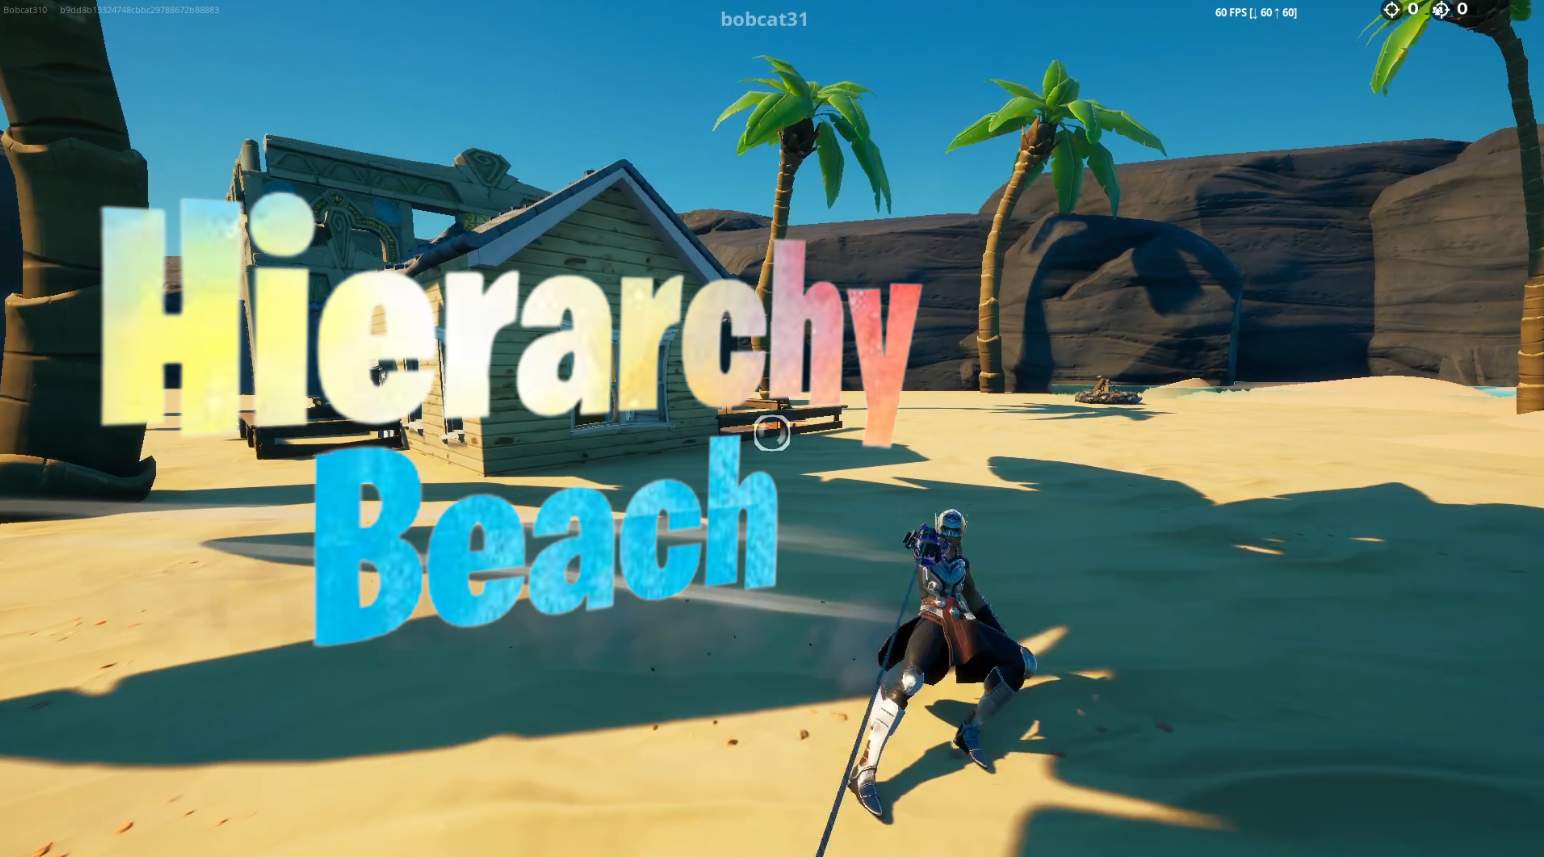 Hierarchy Beach